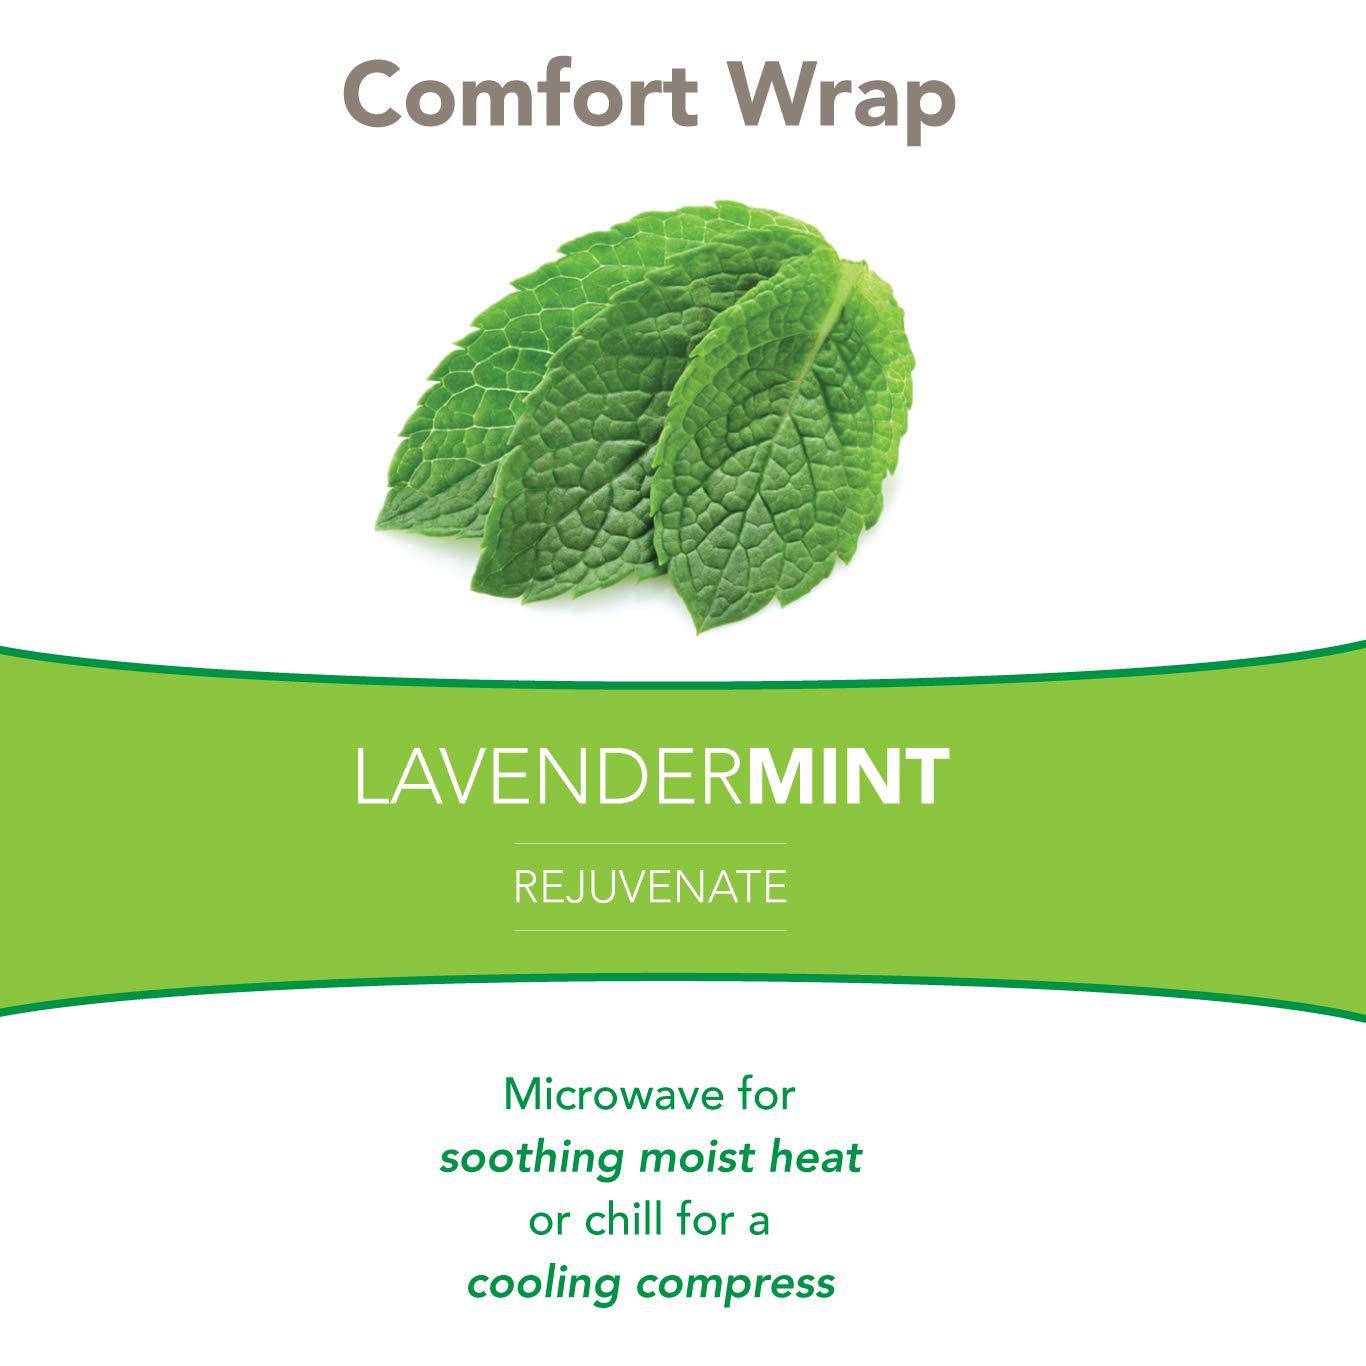 Bed Buddy Comfort Wrap - Carex Health Brands